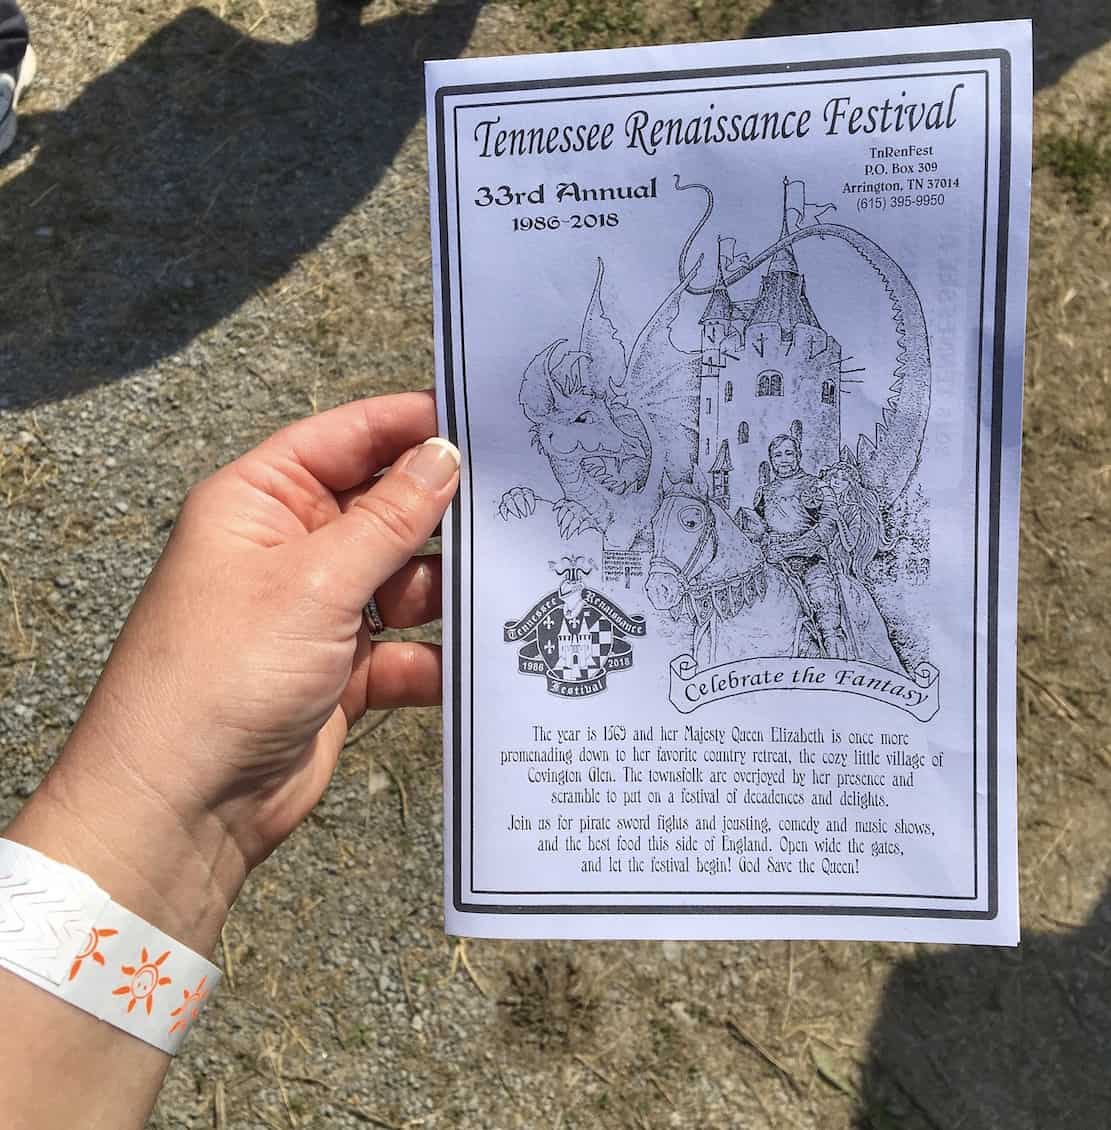 Tennessee Renaissance Festival review